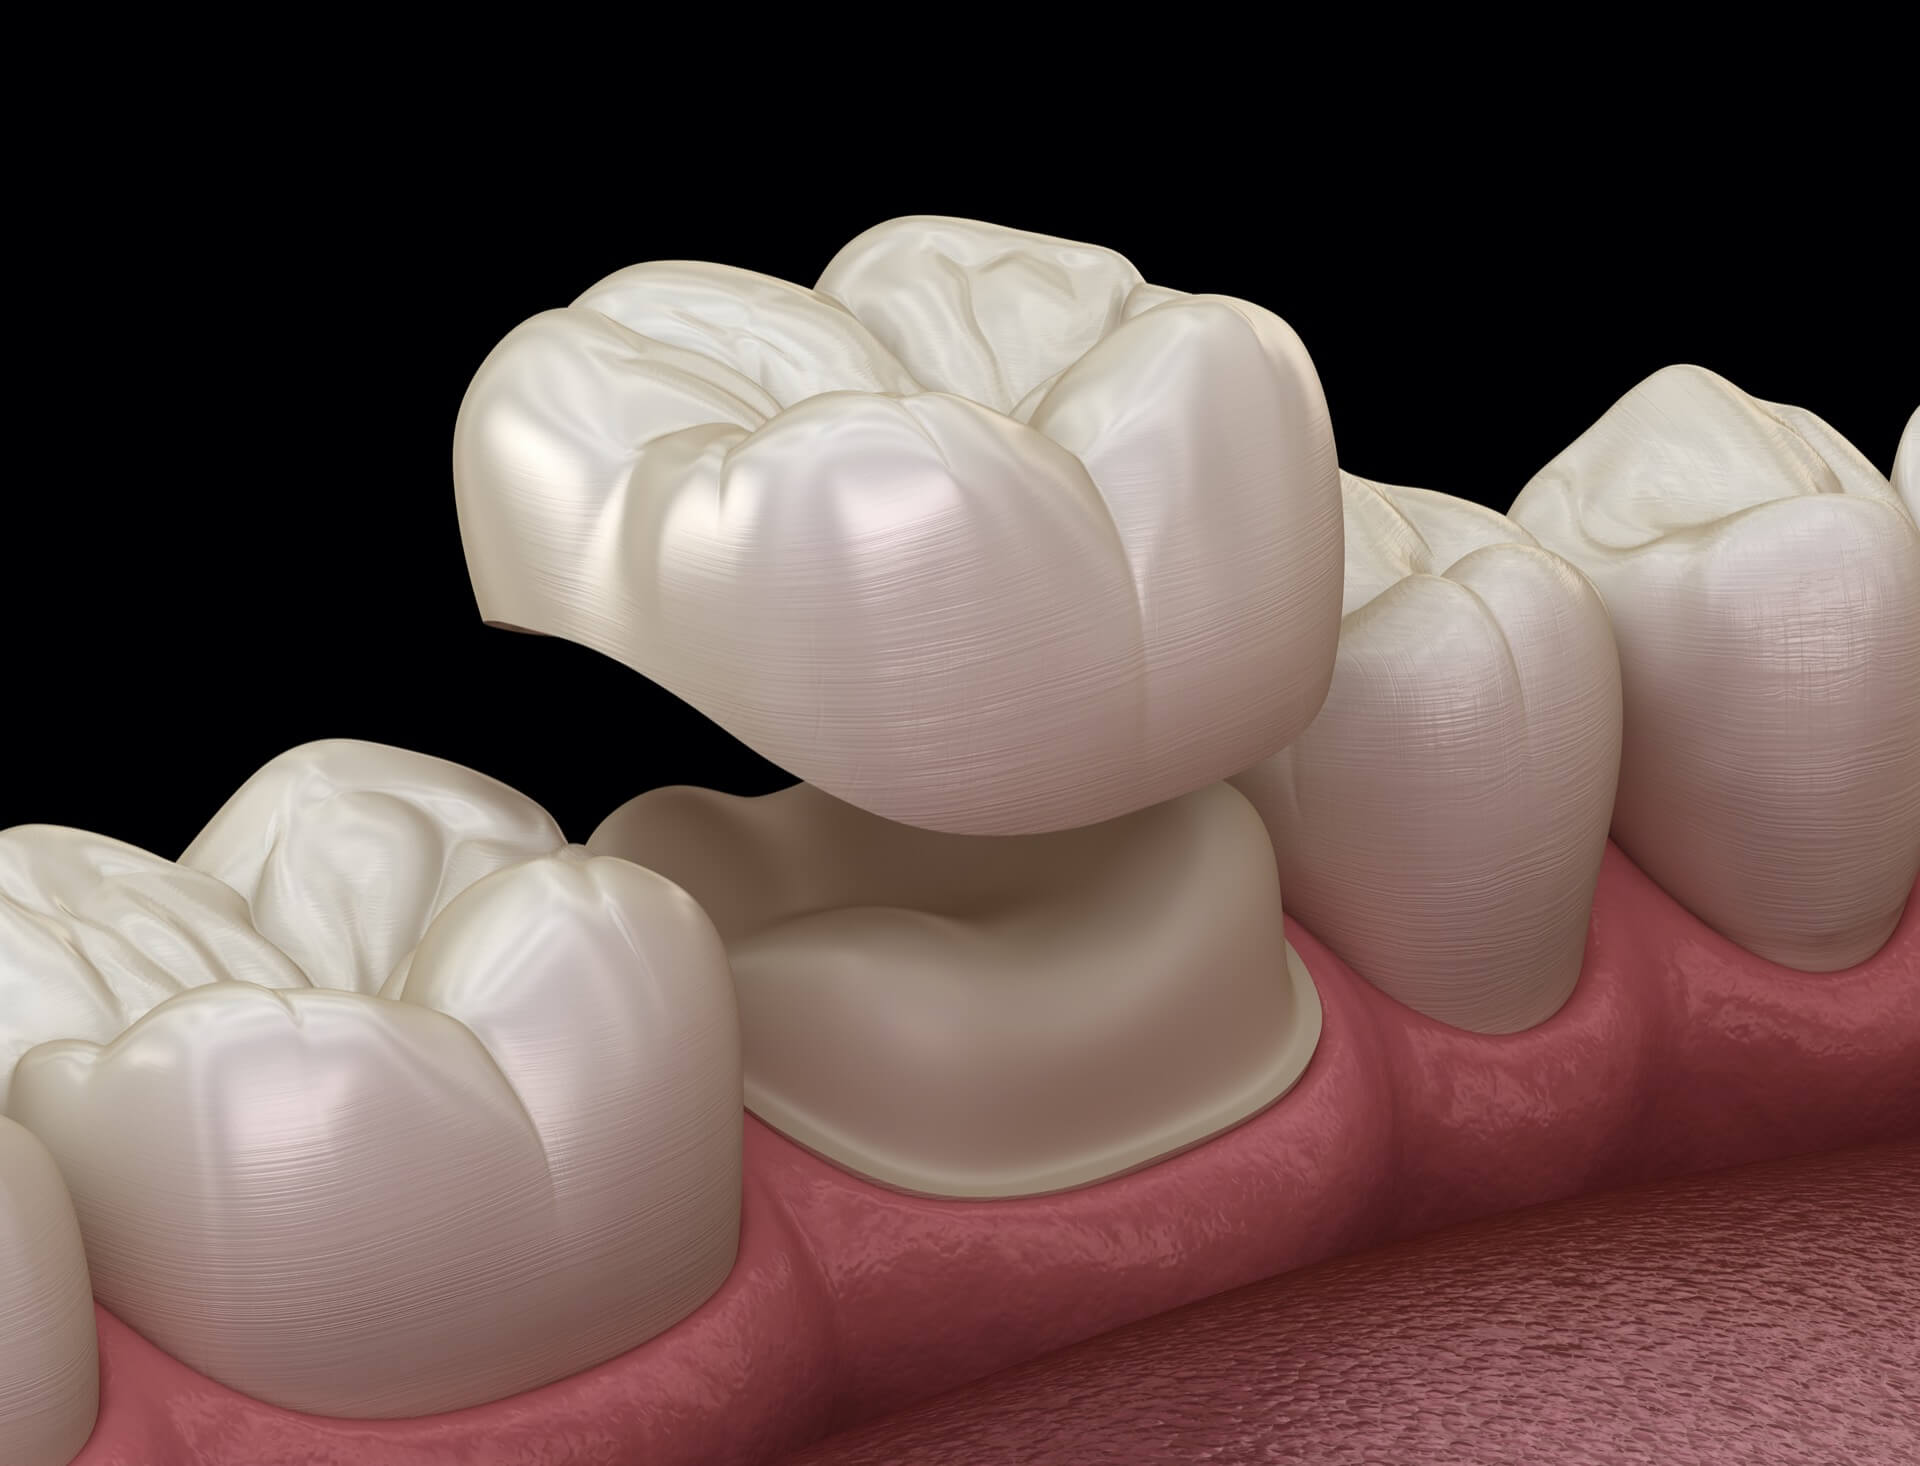 Restorative Dentist | Dental Crowns in Colorado Springs ...